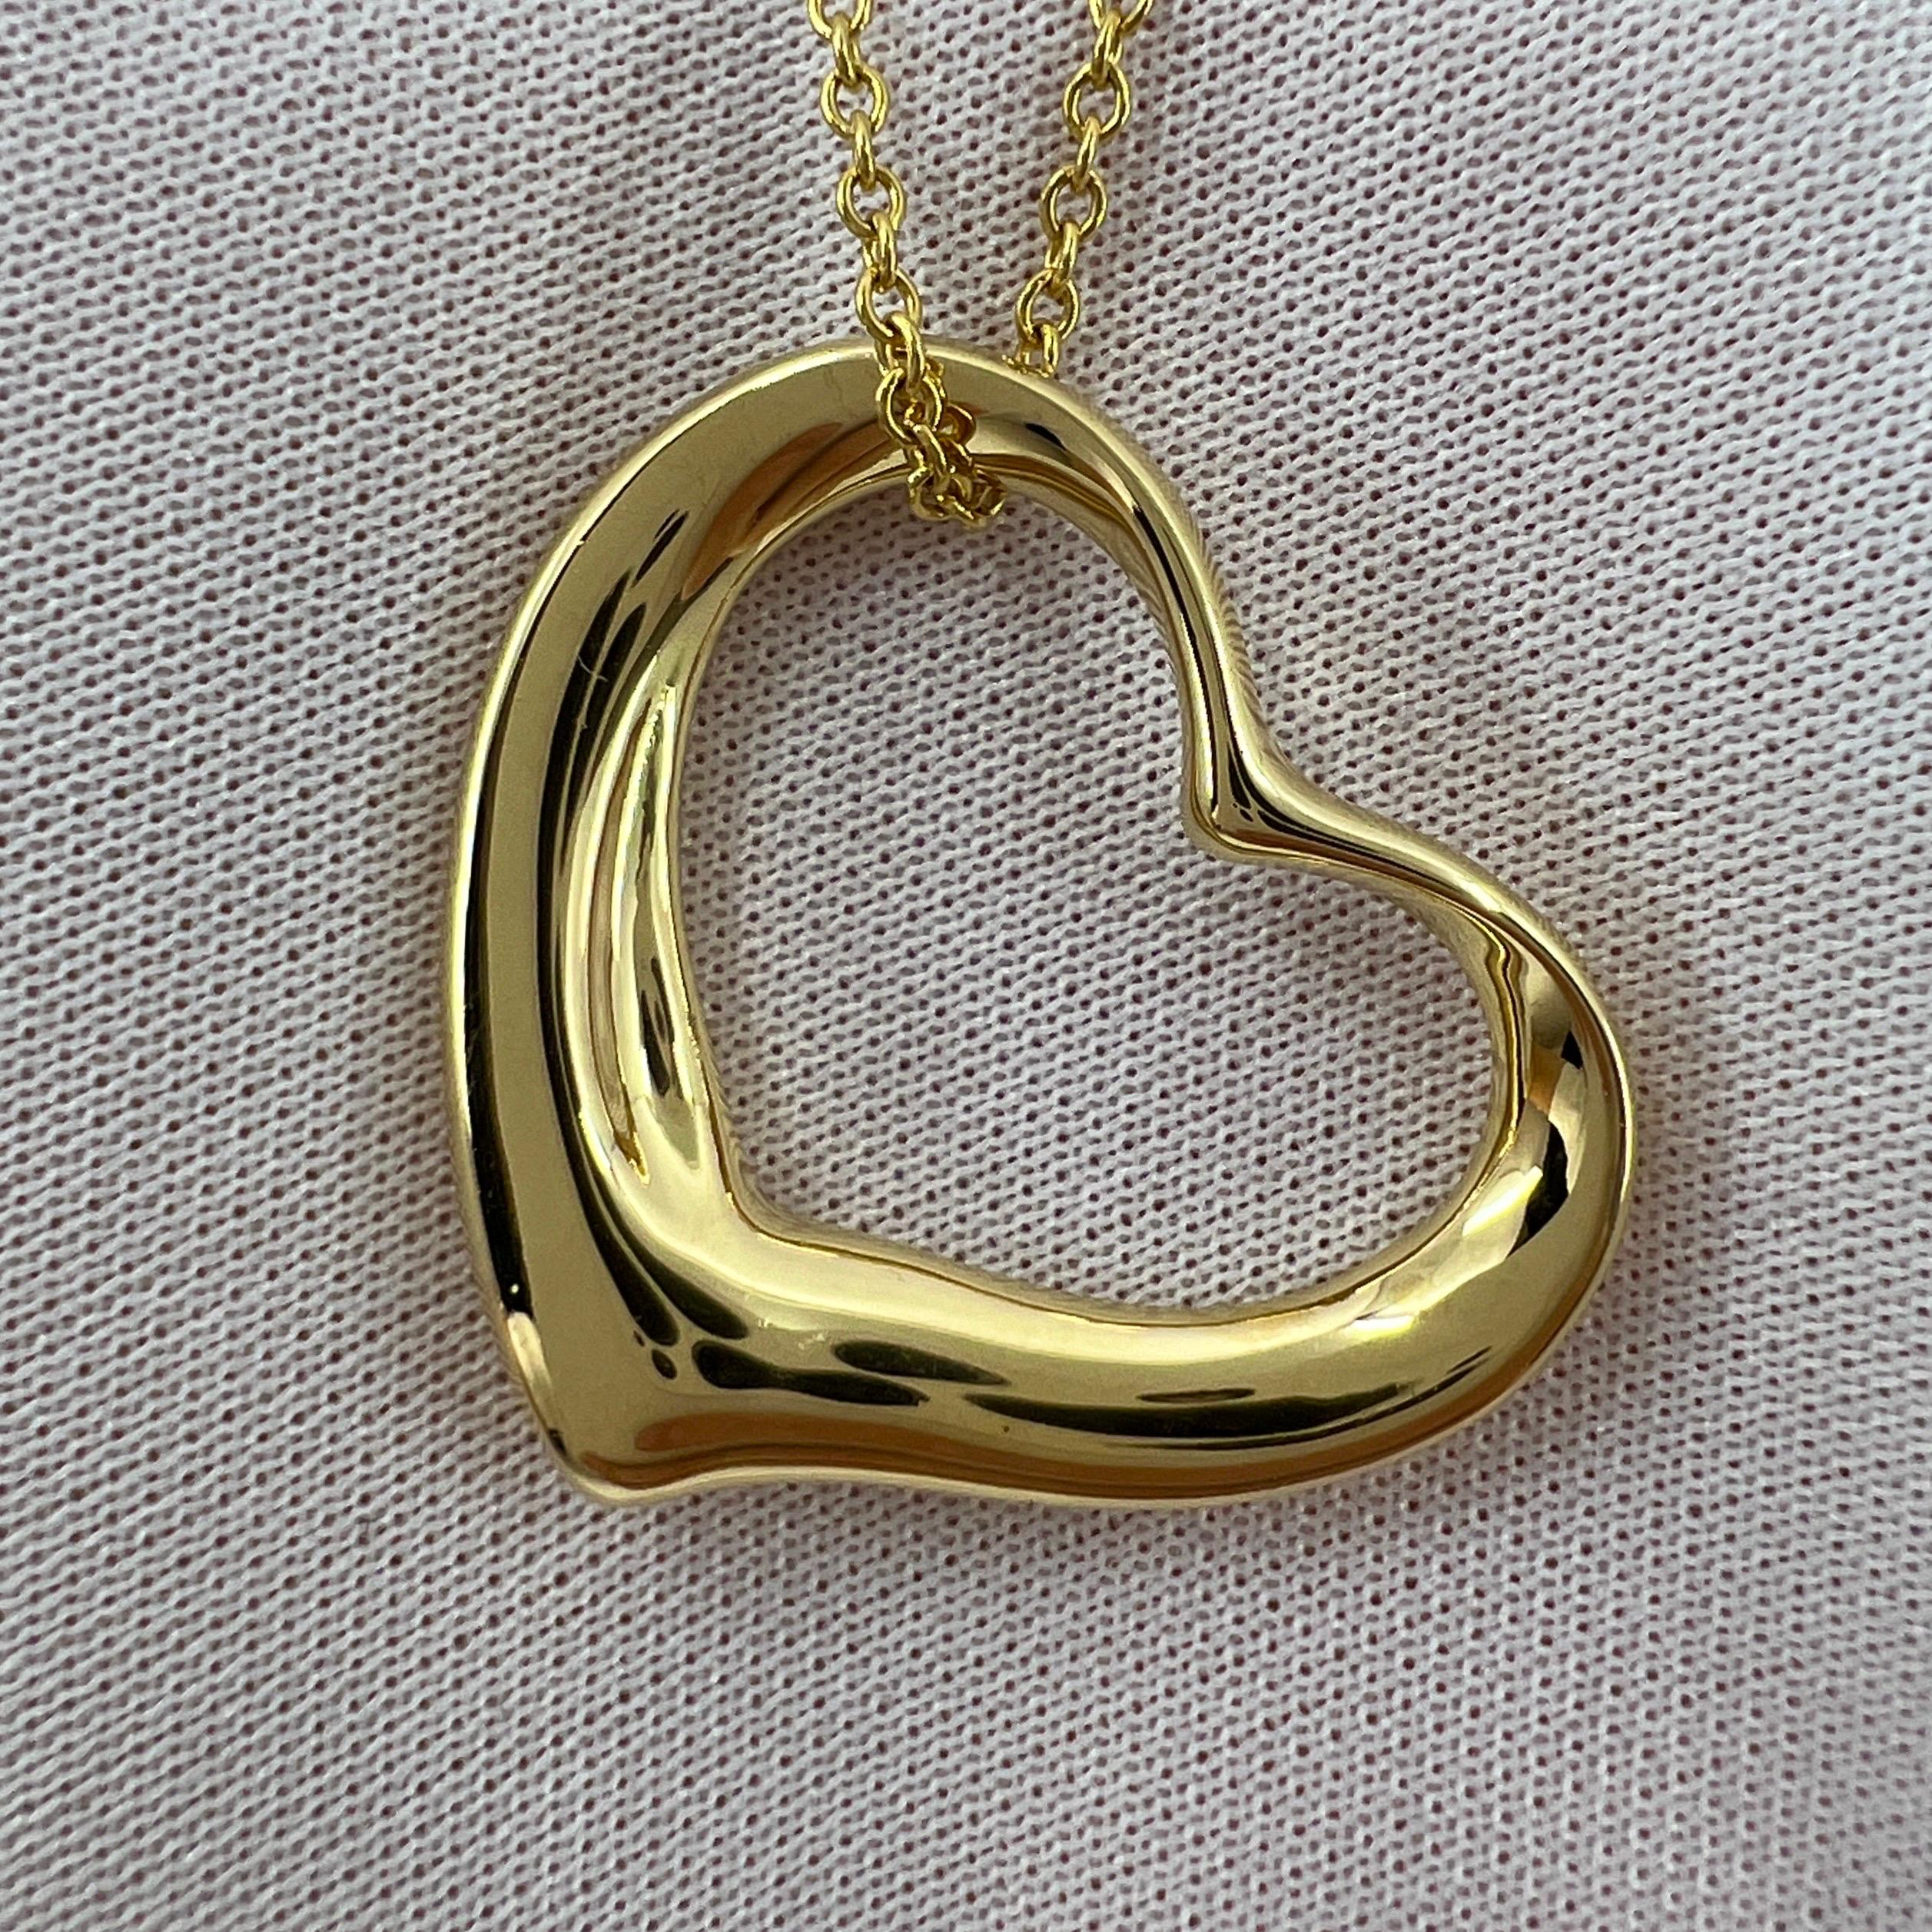 Tiffany & Co. Elsa Peretti Extra Large Open Heart 18k Gold Pendant Necklace 5